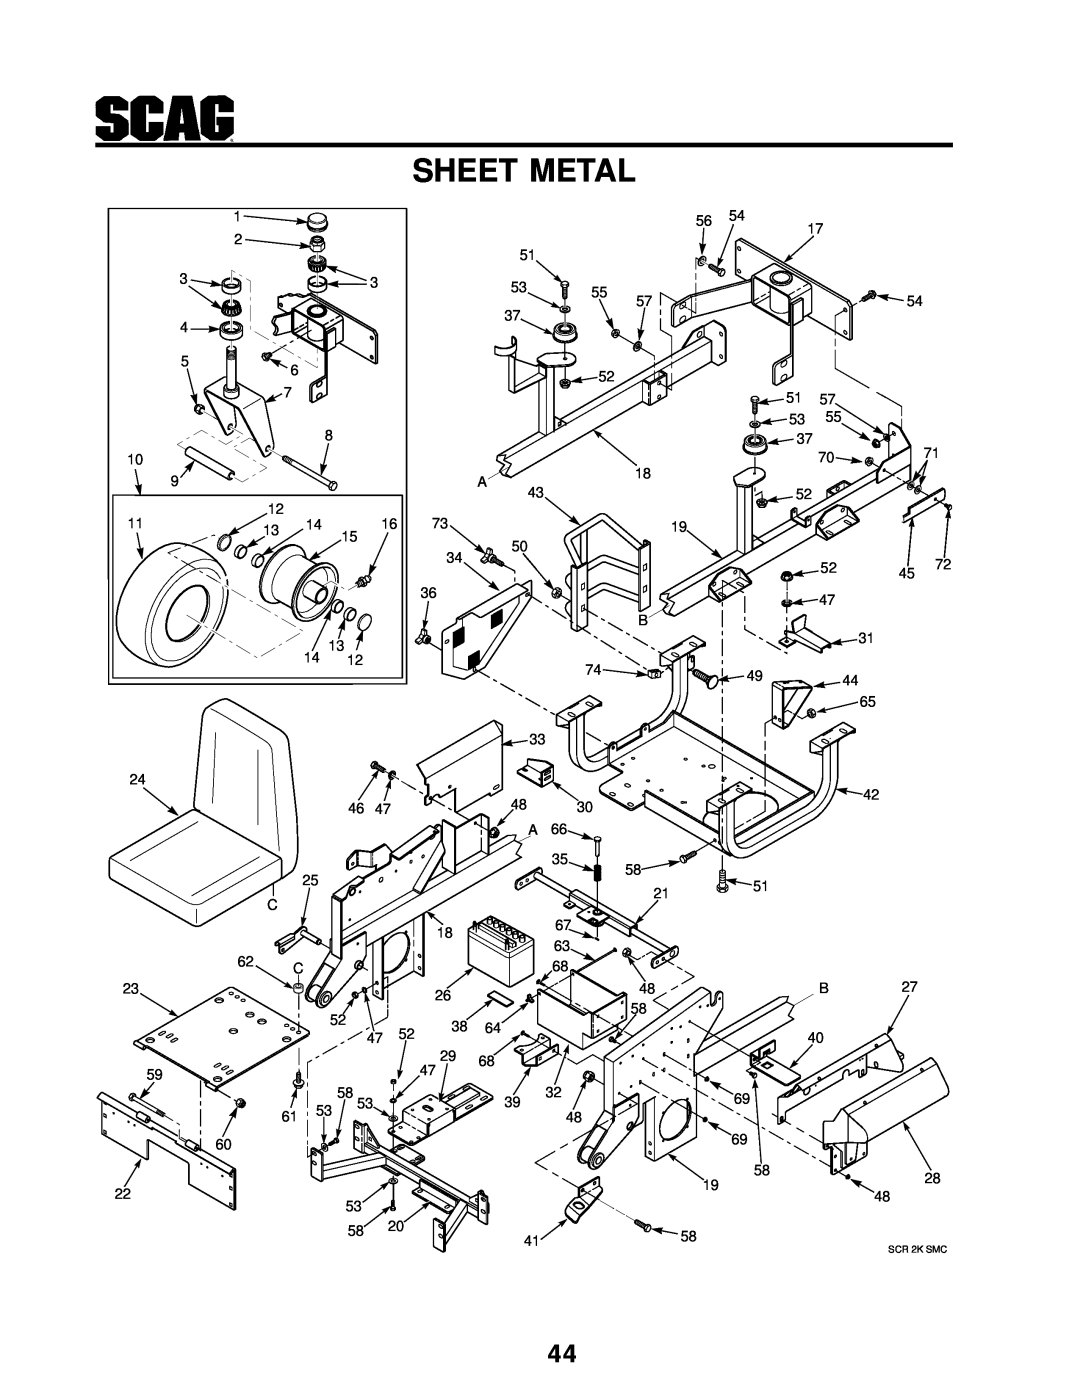 MB QUART manual Sheet Metal, SCR 2K SMC 